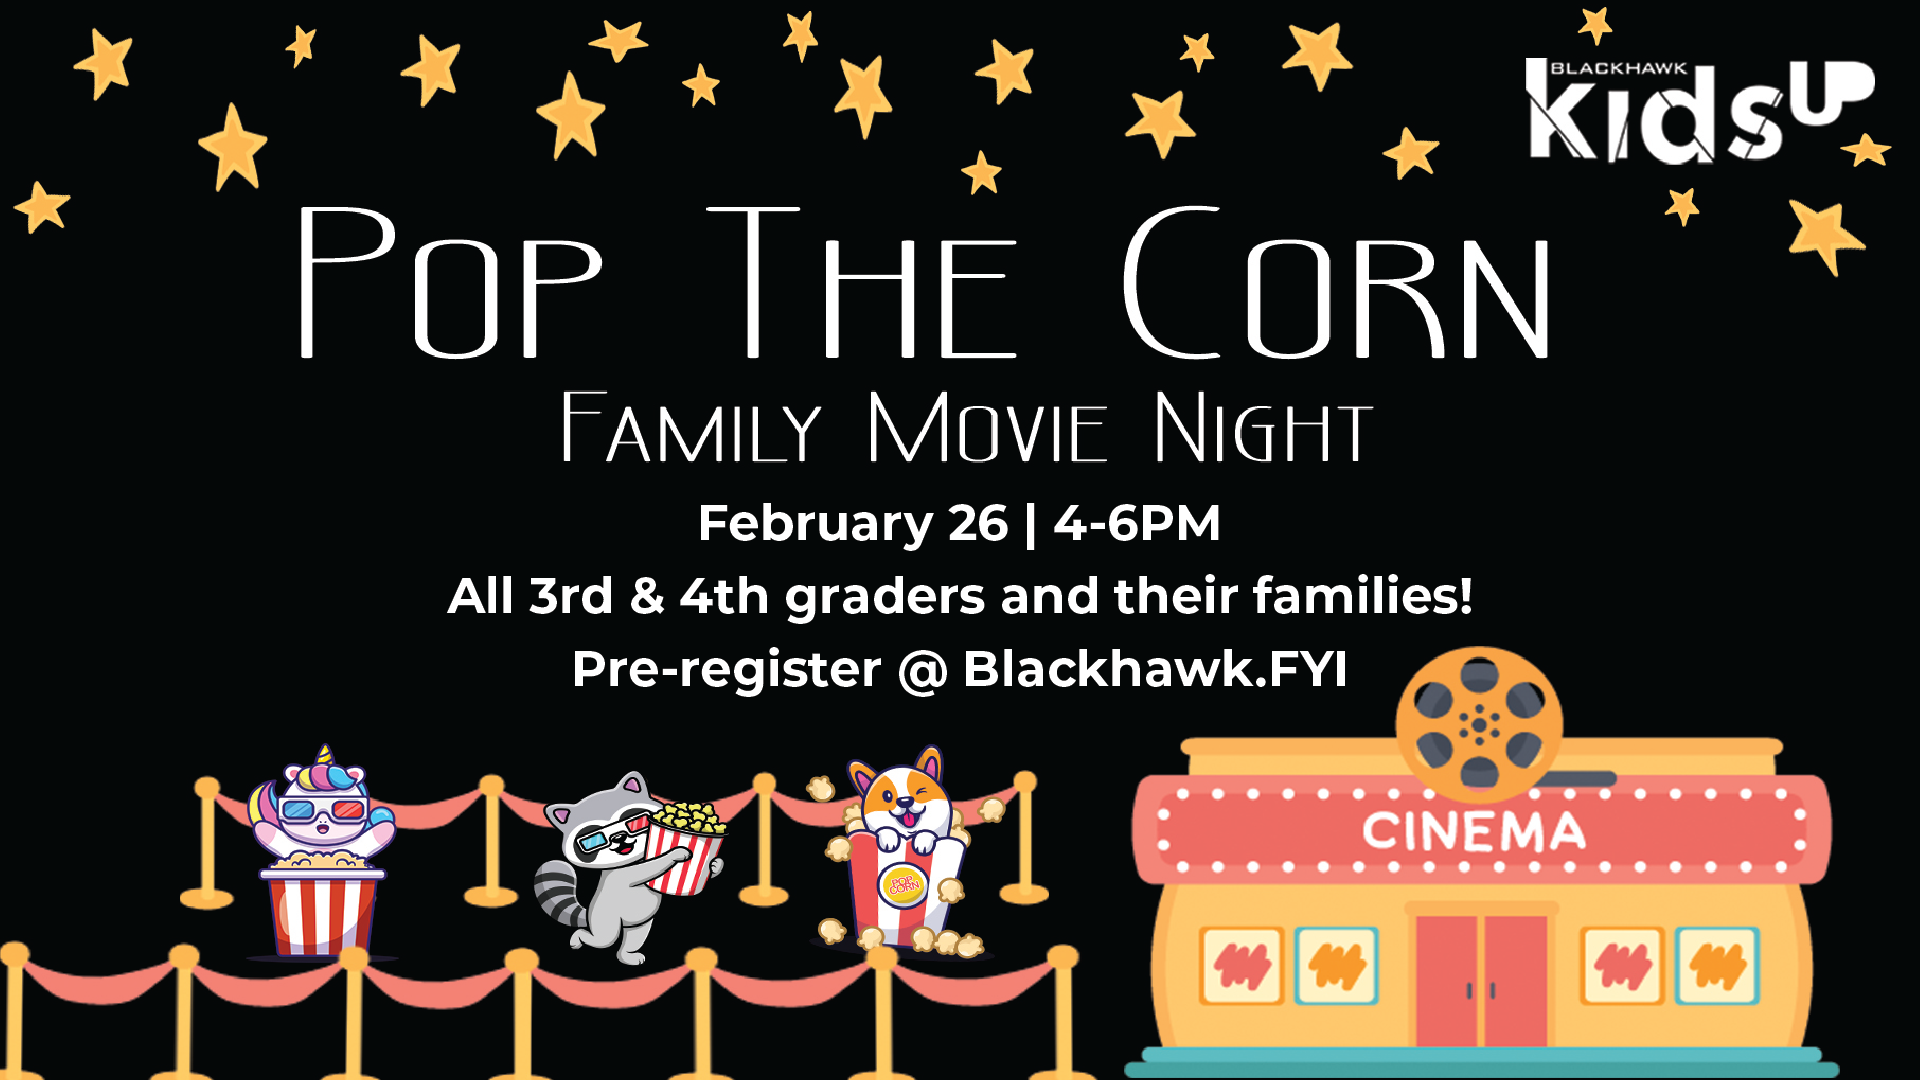 PoP the Corn! It’s KIDSUP Movie Night